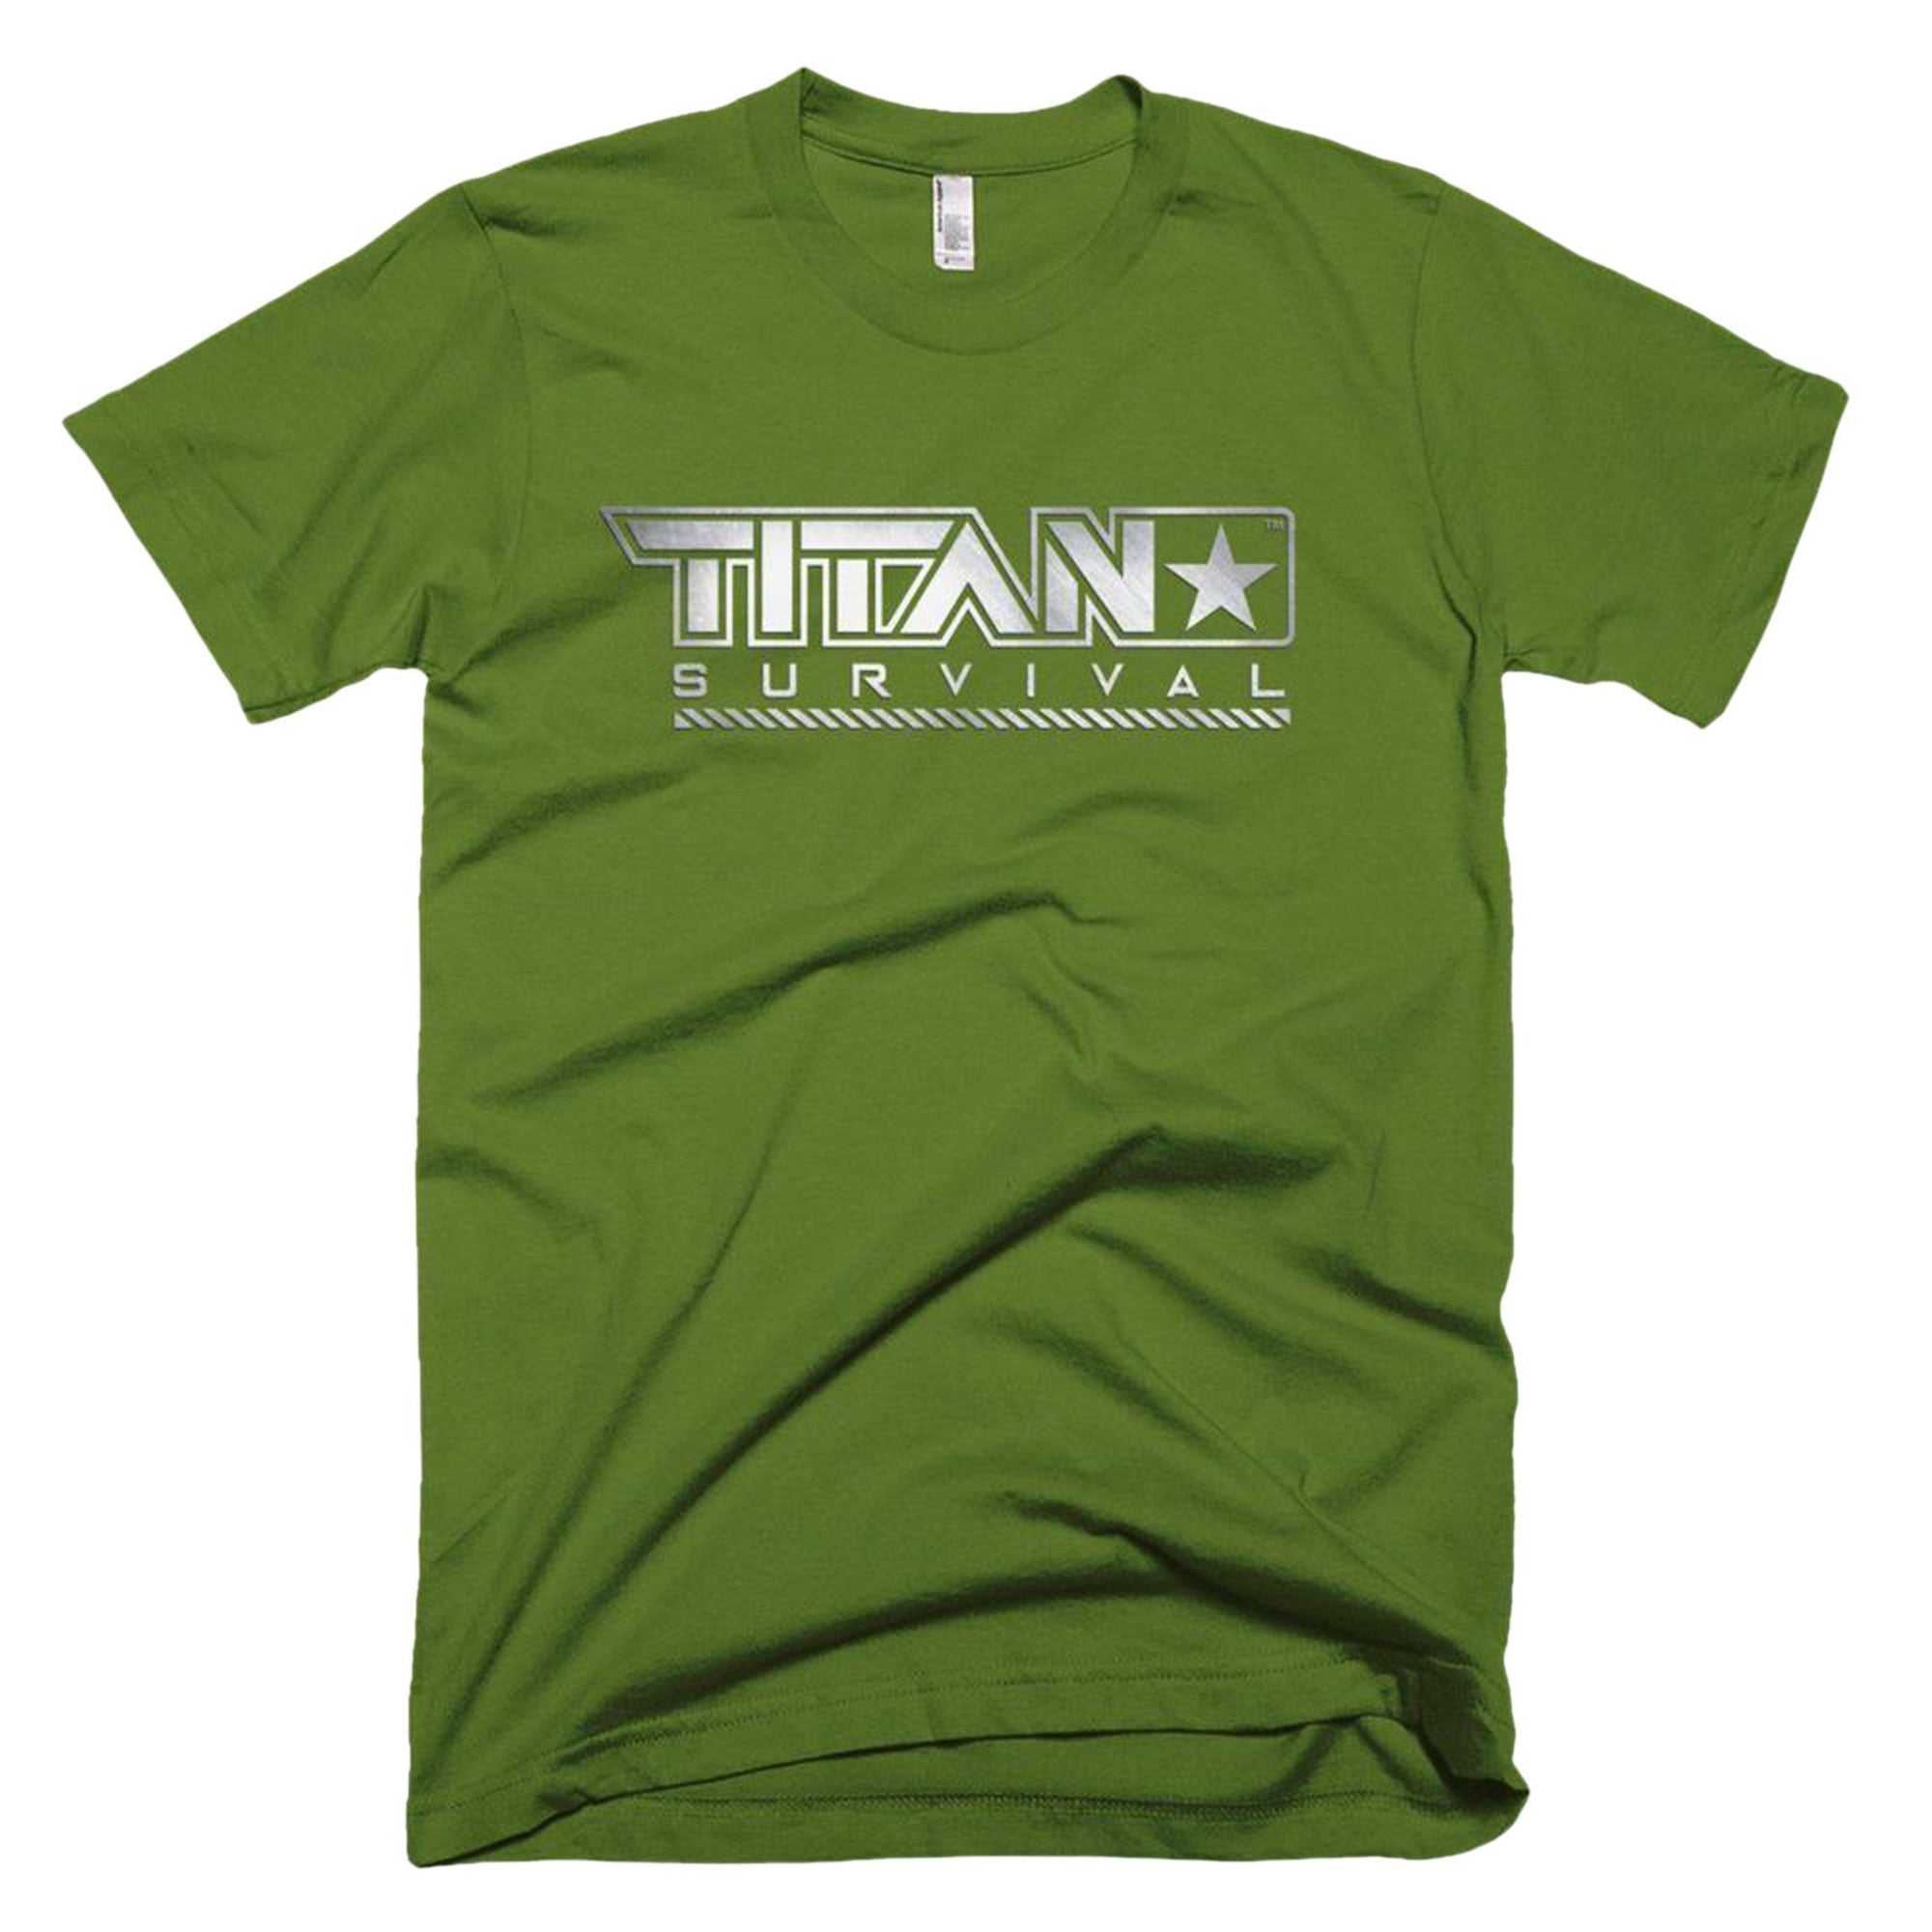 Easy Tiger Vintage Unisex T-Shirt. Slim Fit Olive Green Tee. Shirt